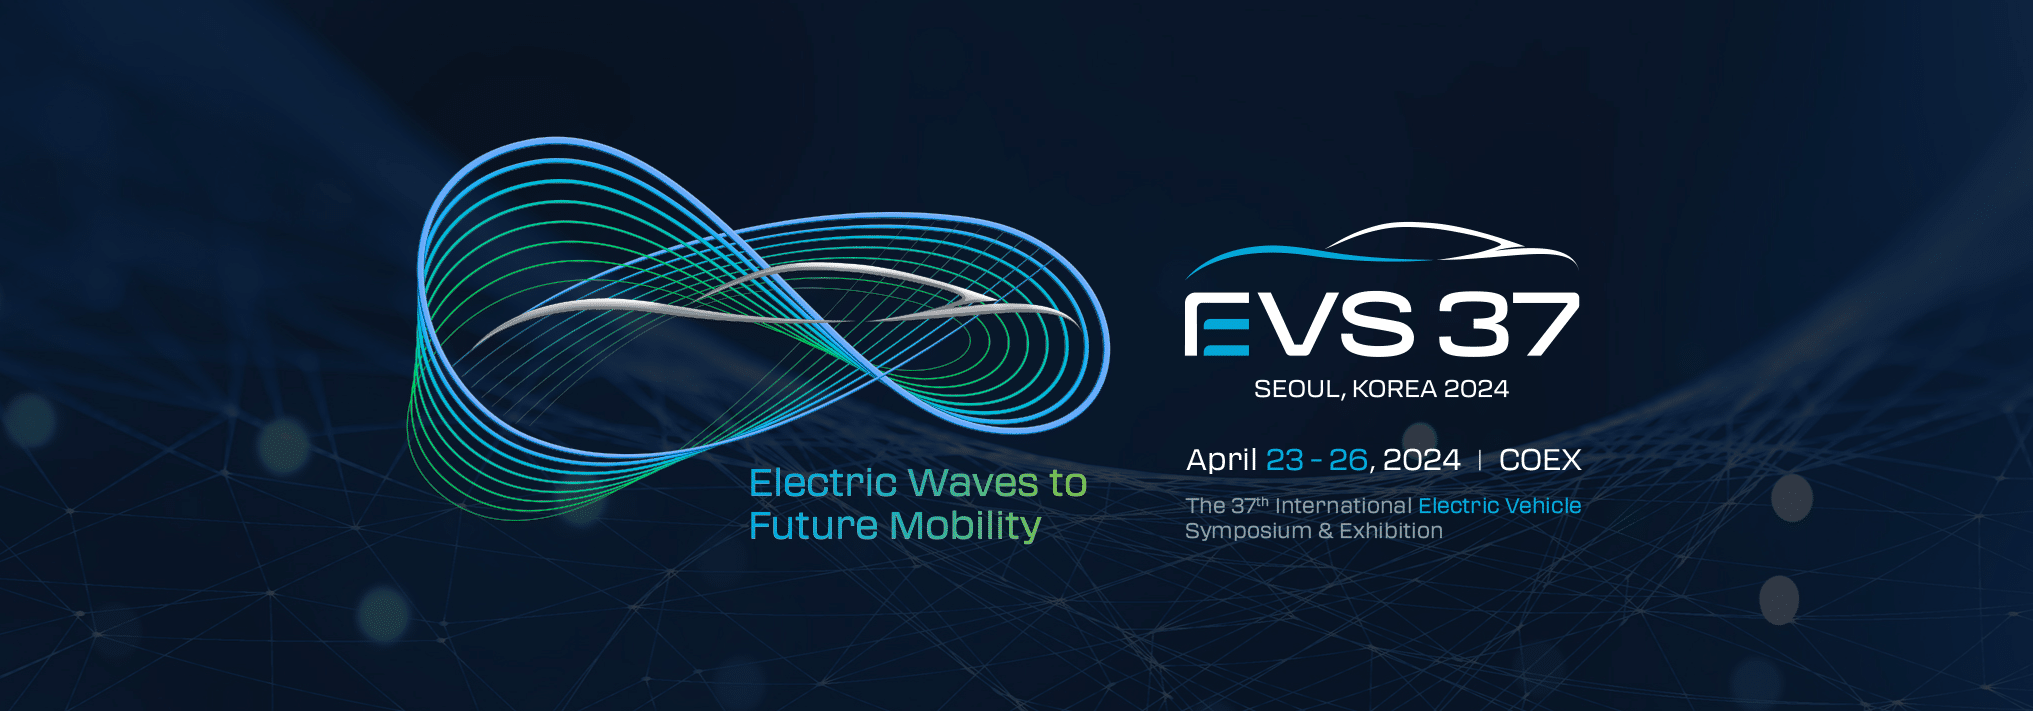 The 37th International Electric Vehicle Symposium & Exhibition Light